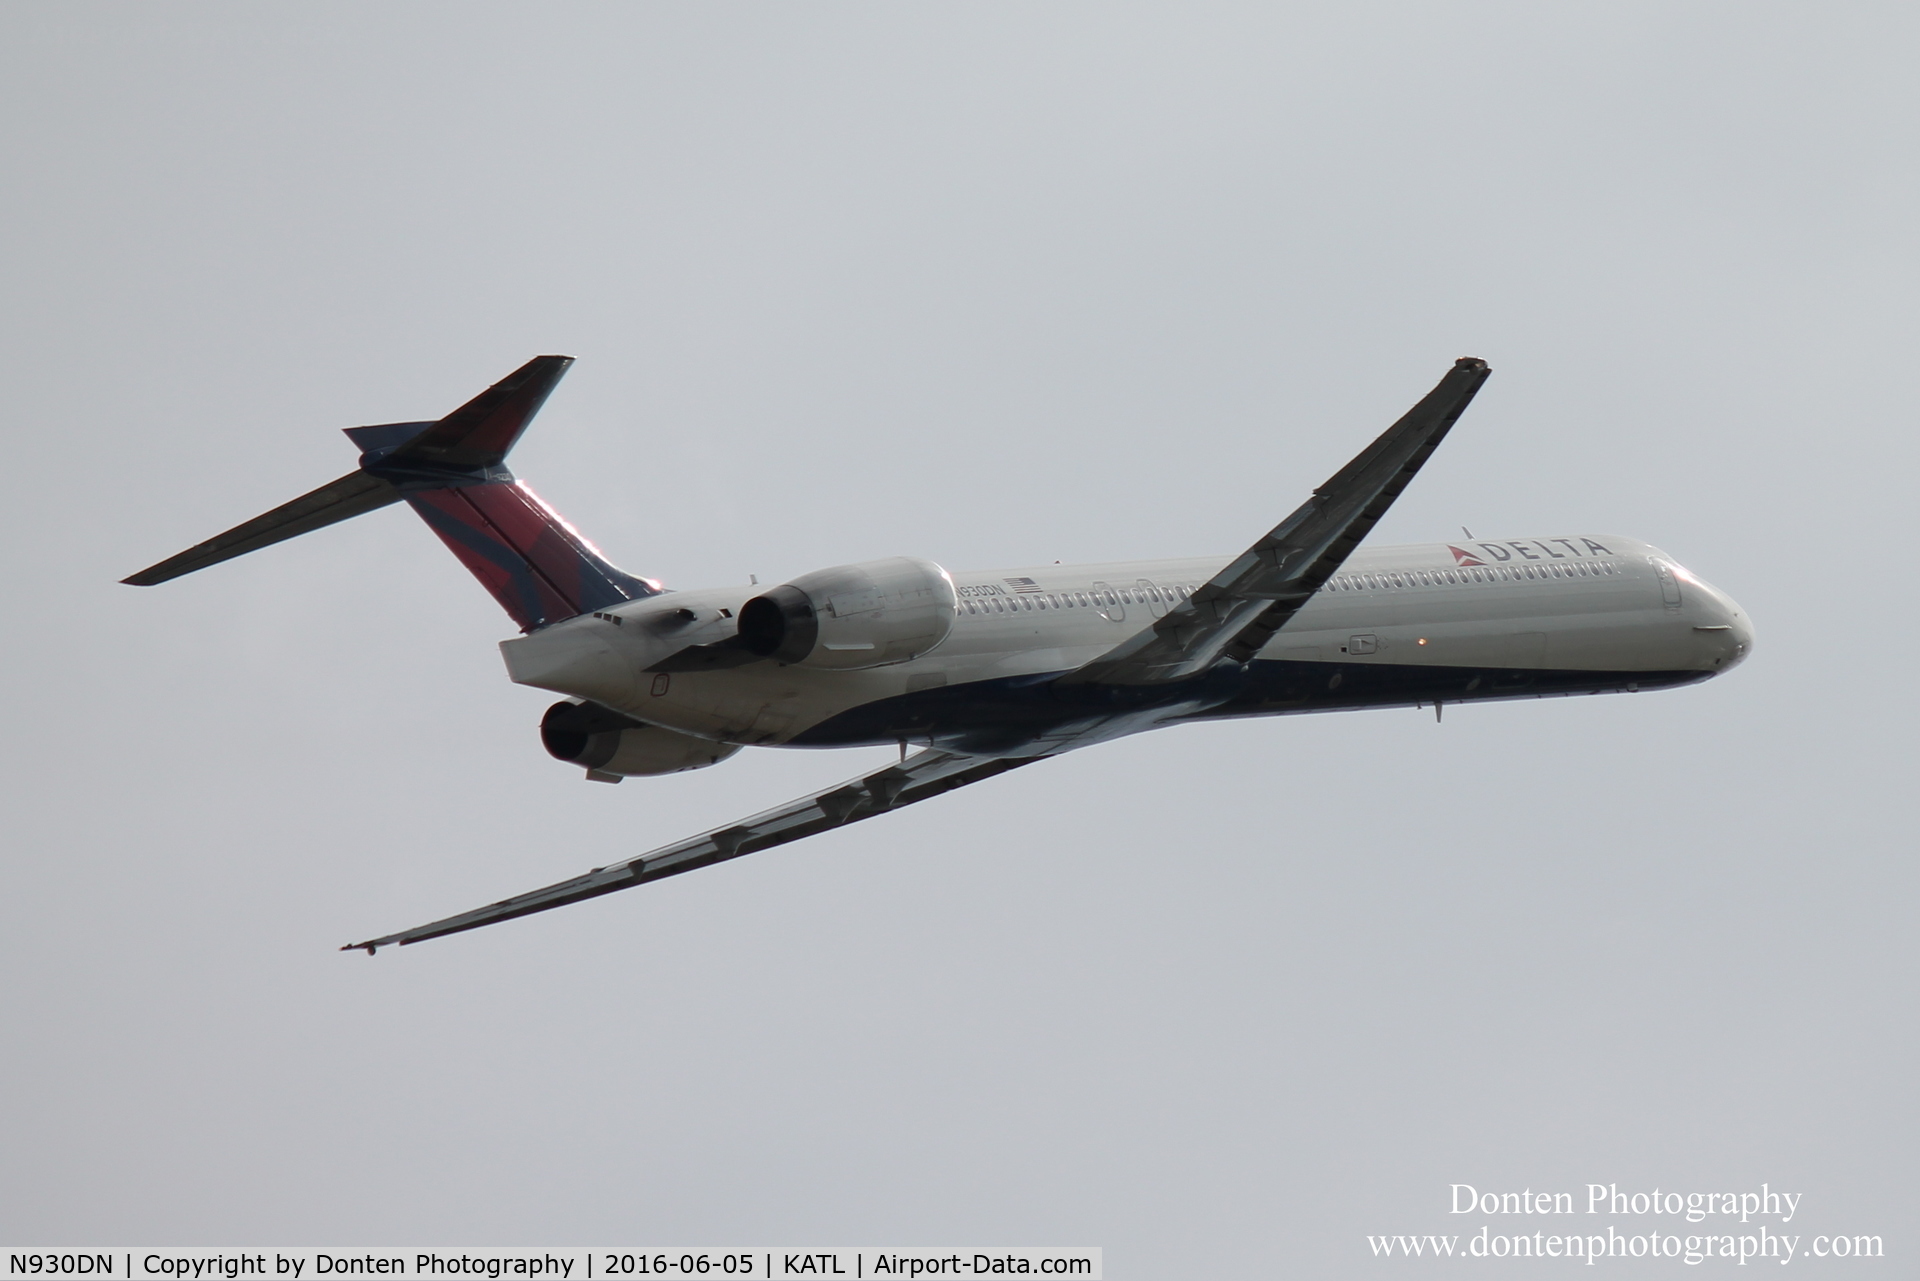 N930DN, 1996 McDonnell Douglas MD-90-30 C/N 53458, Delta Flight 1800 (N930DN) departs Hartsfield-Jackson Atlanta International Airport enroute to Boston Logan International Airport